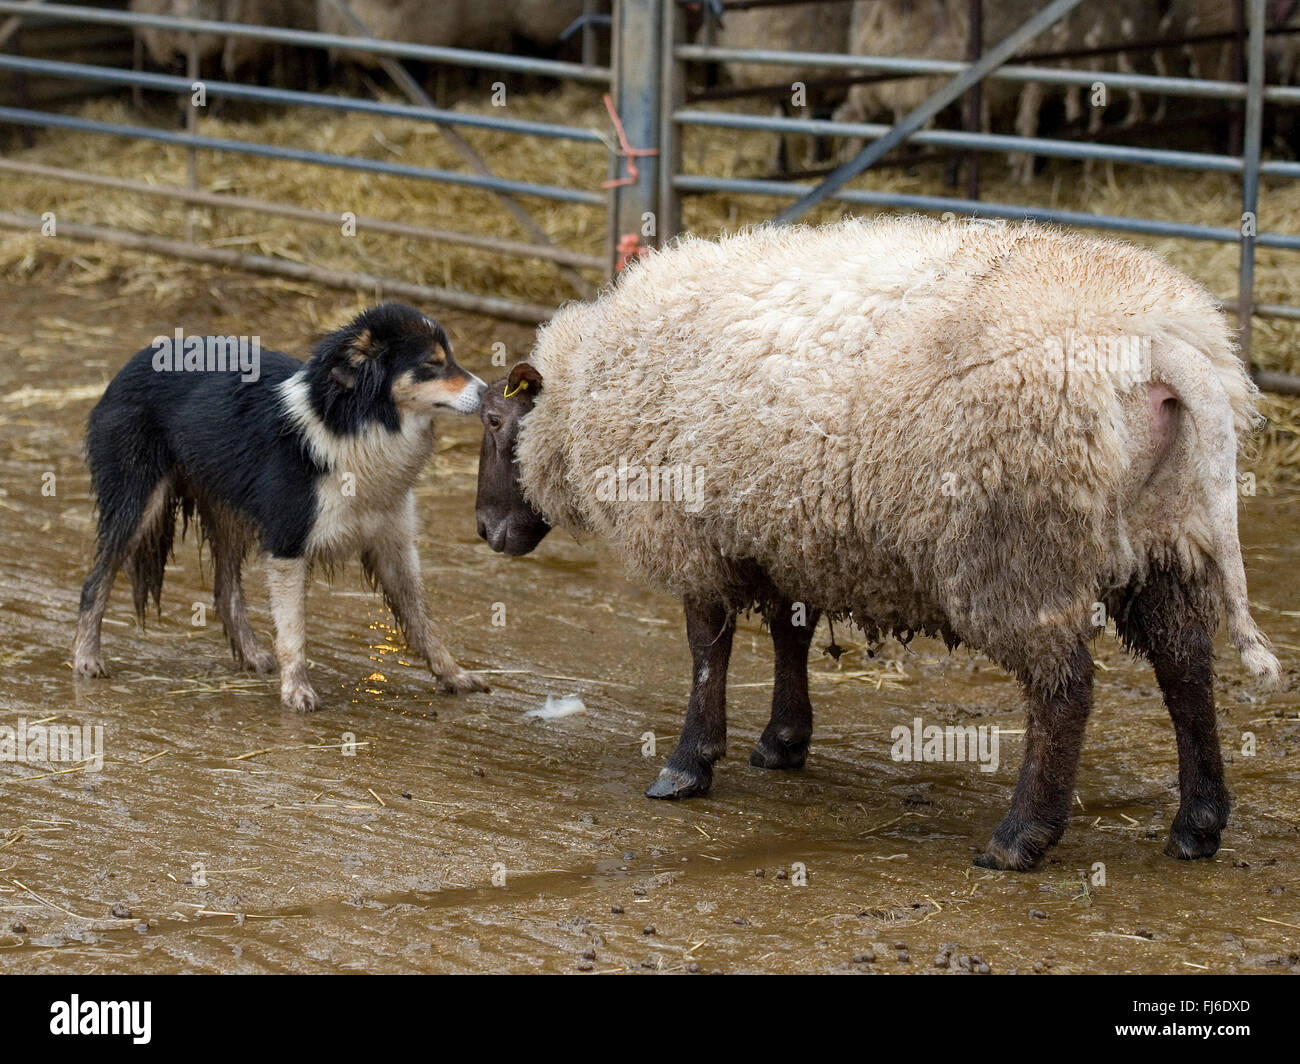 sheep butting dog Stock Photo